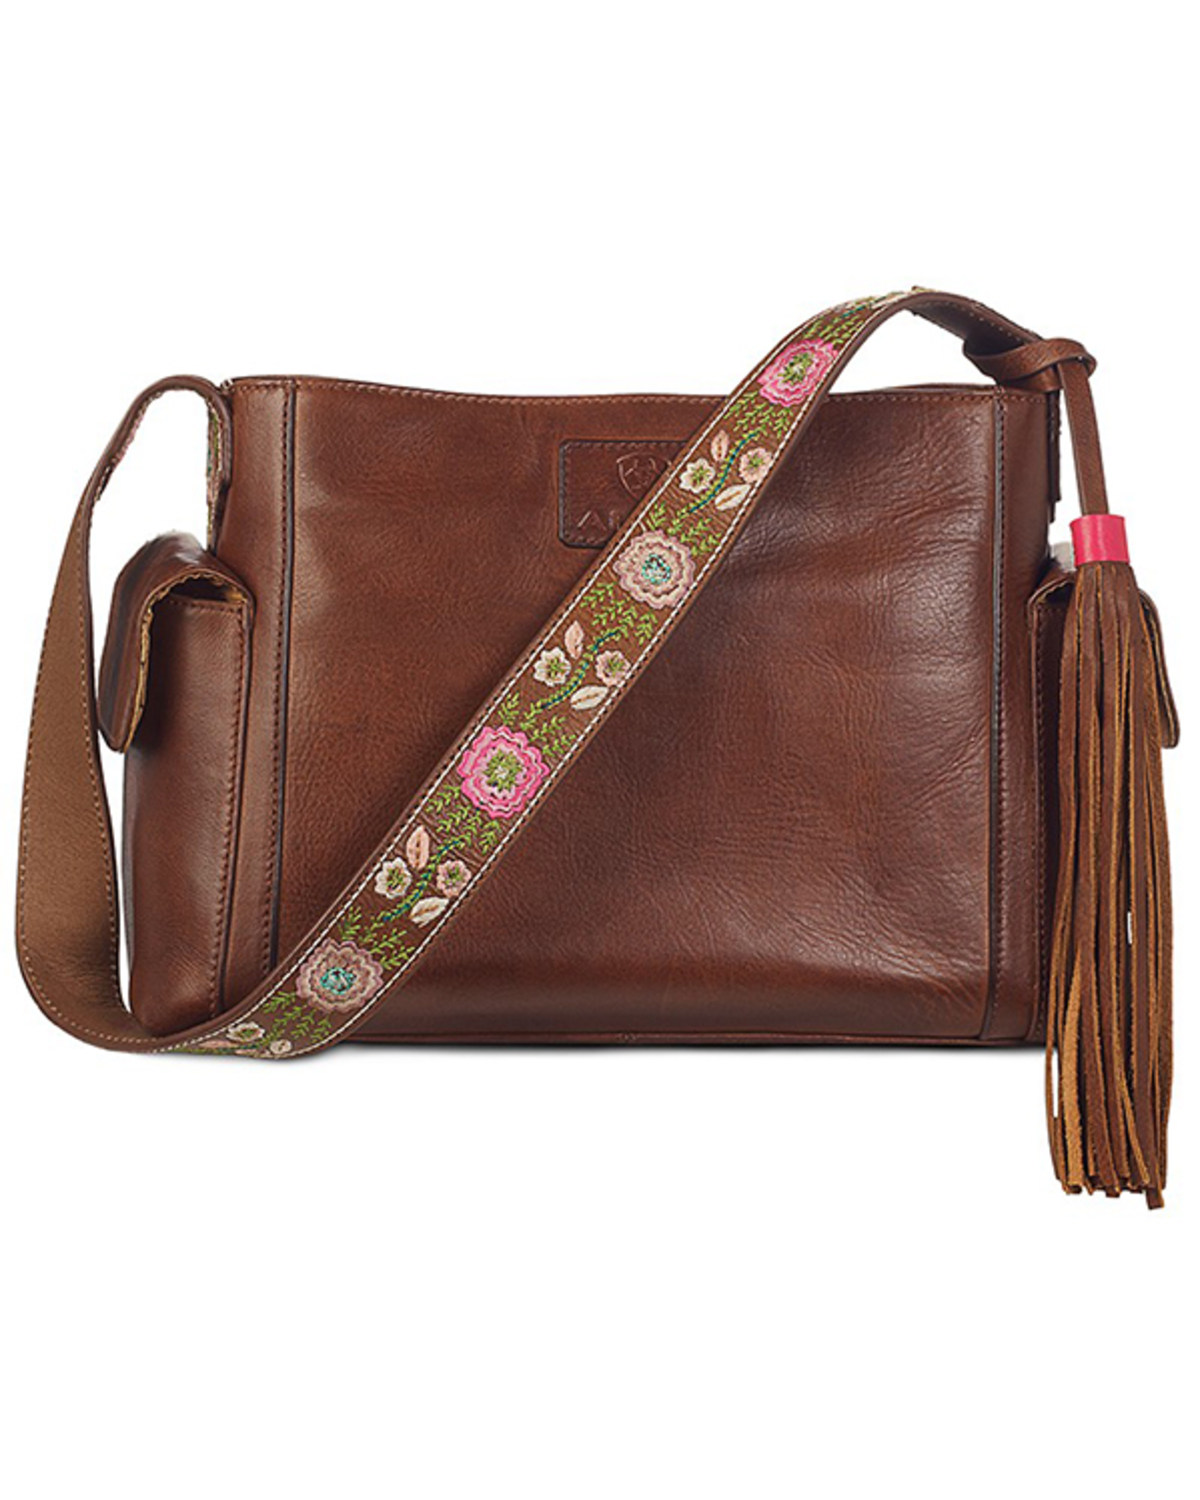 Ariat Women's Addison Concealed Carry Satchel Handbag